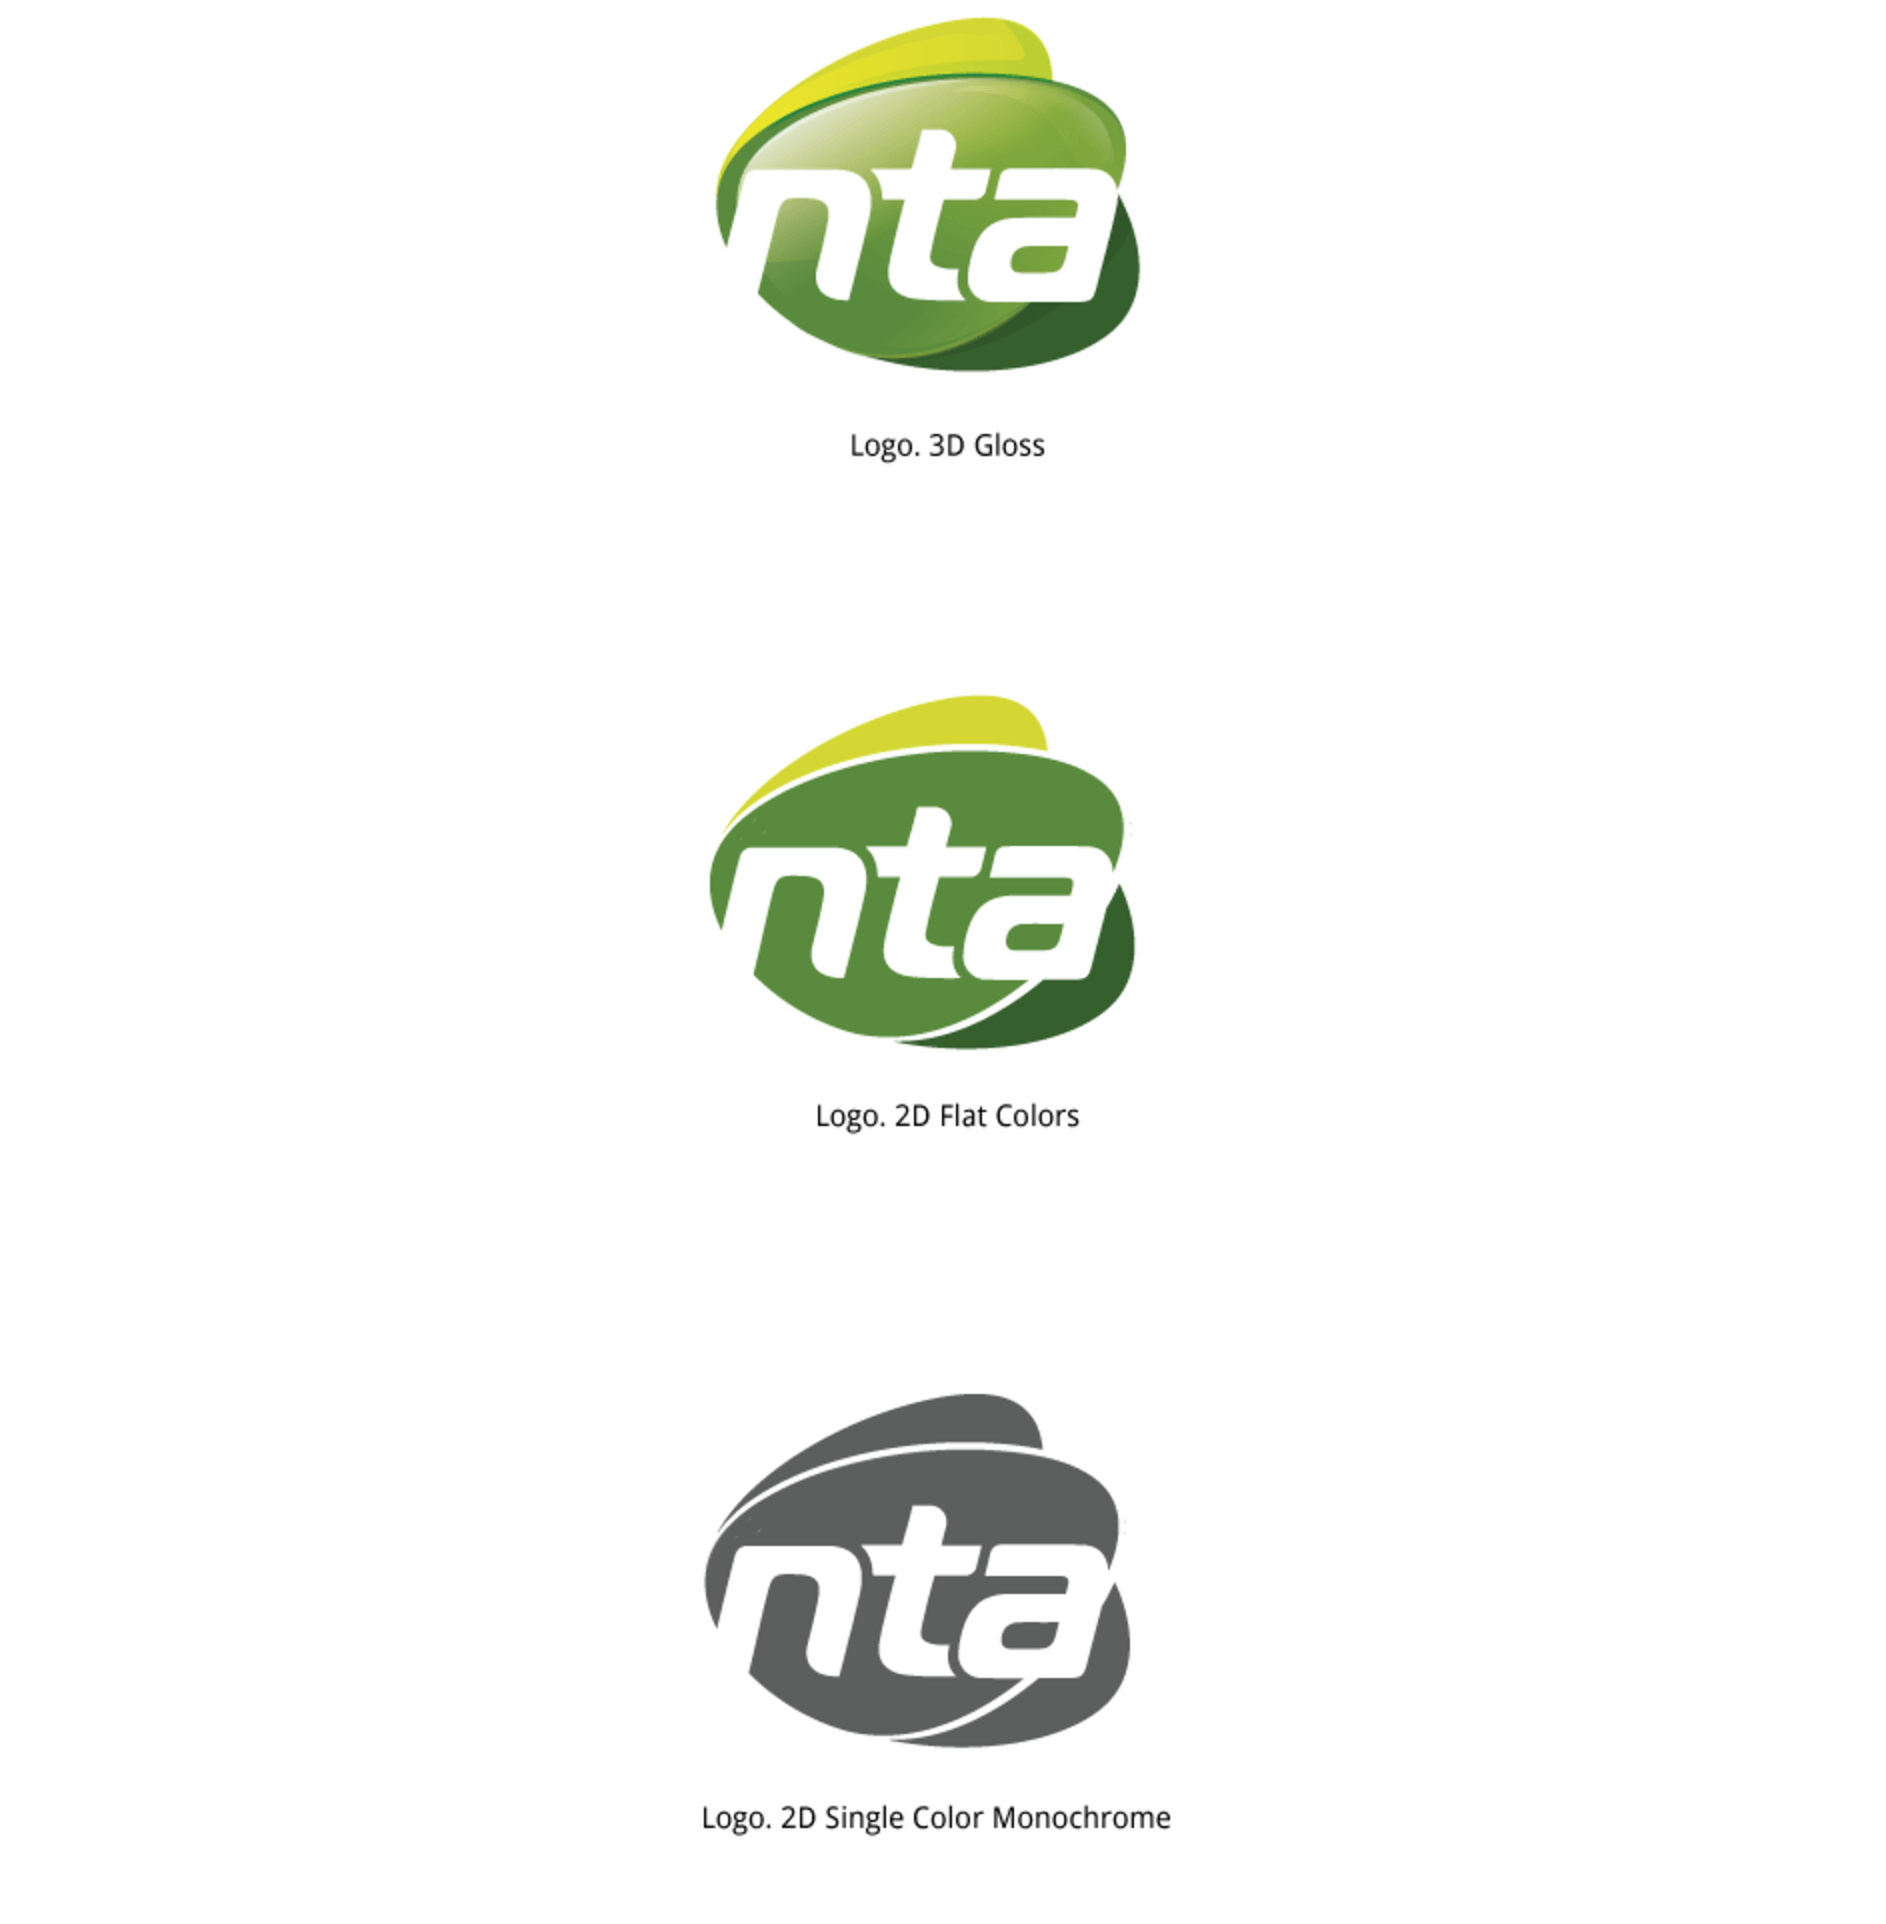 NTA Logo - The Rebranding of NTA - Layrz